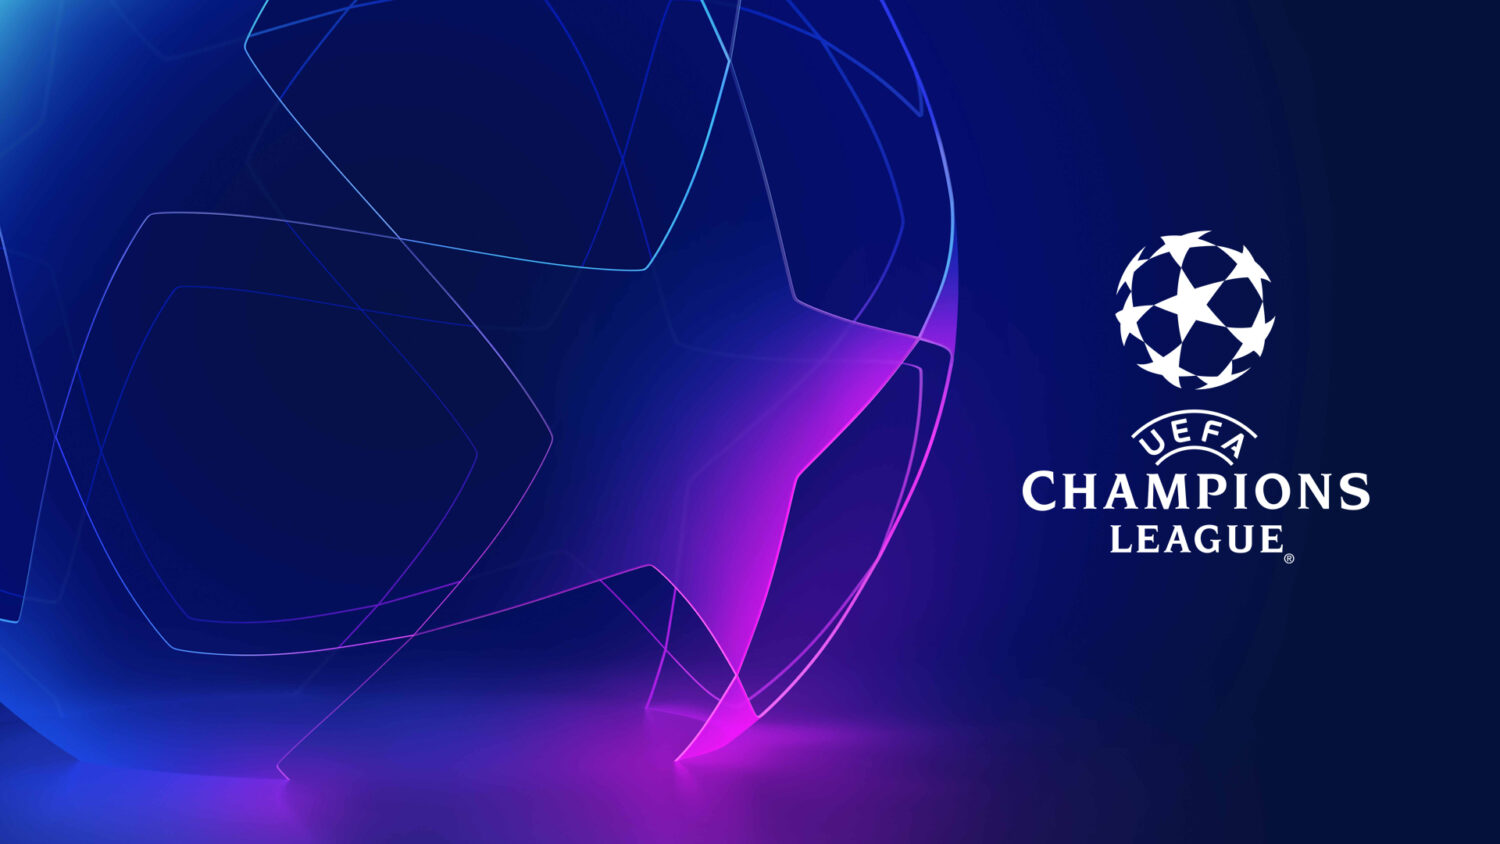 UEFA Champions League – KeyVisual Starball Base